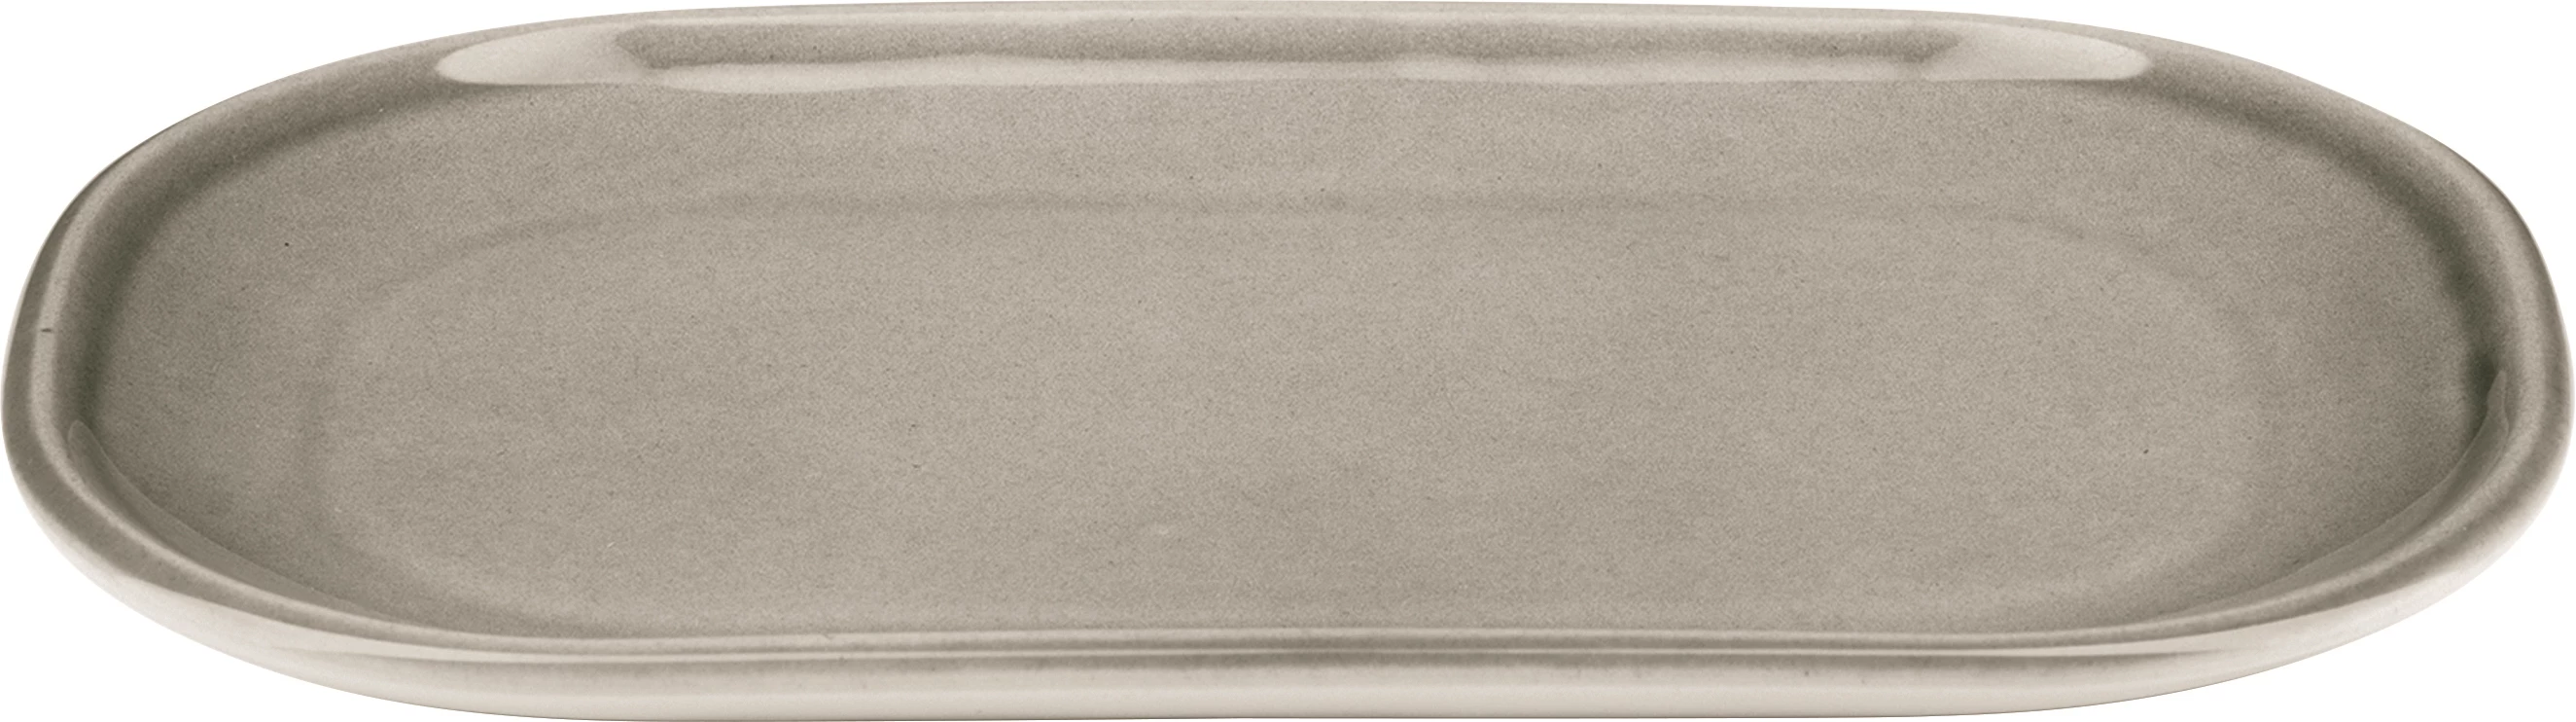 Figgjo Pax tallerken, oval, grå, 20 x 13 cm